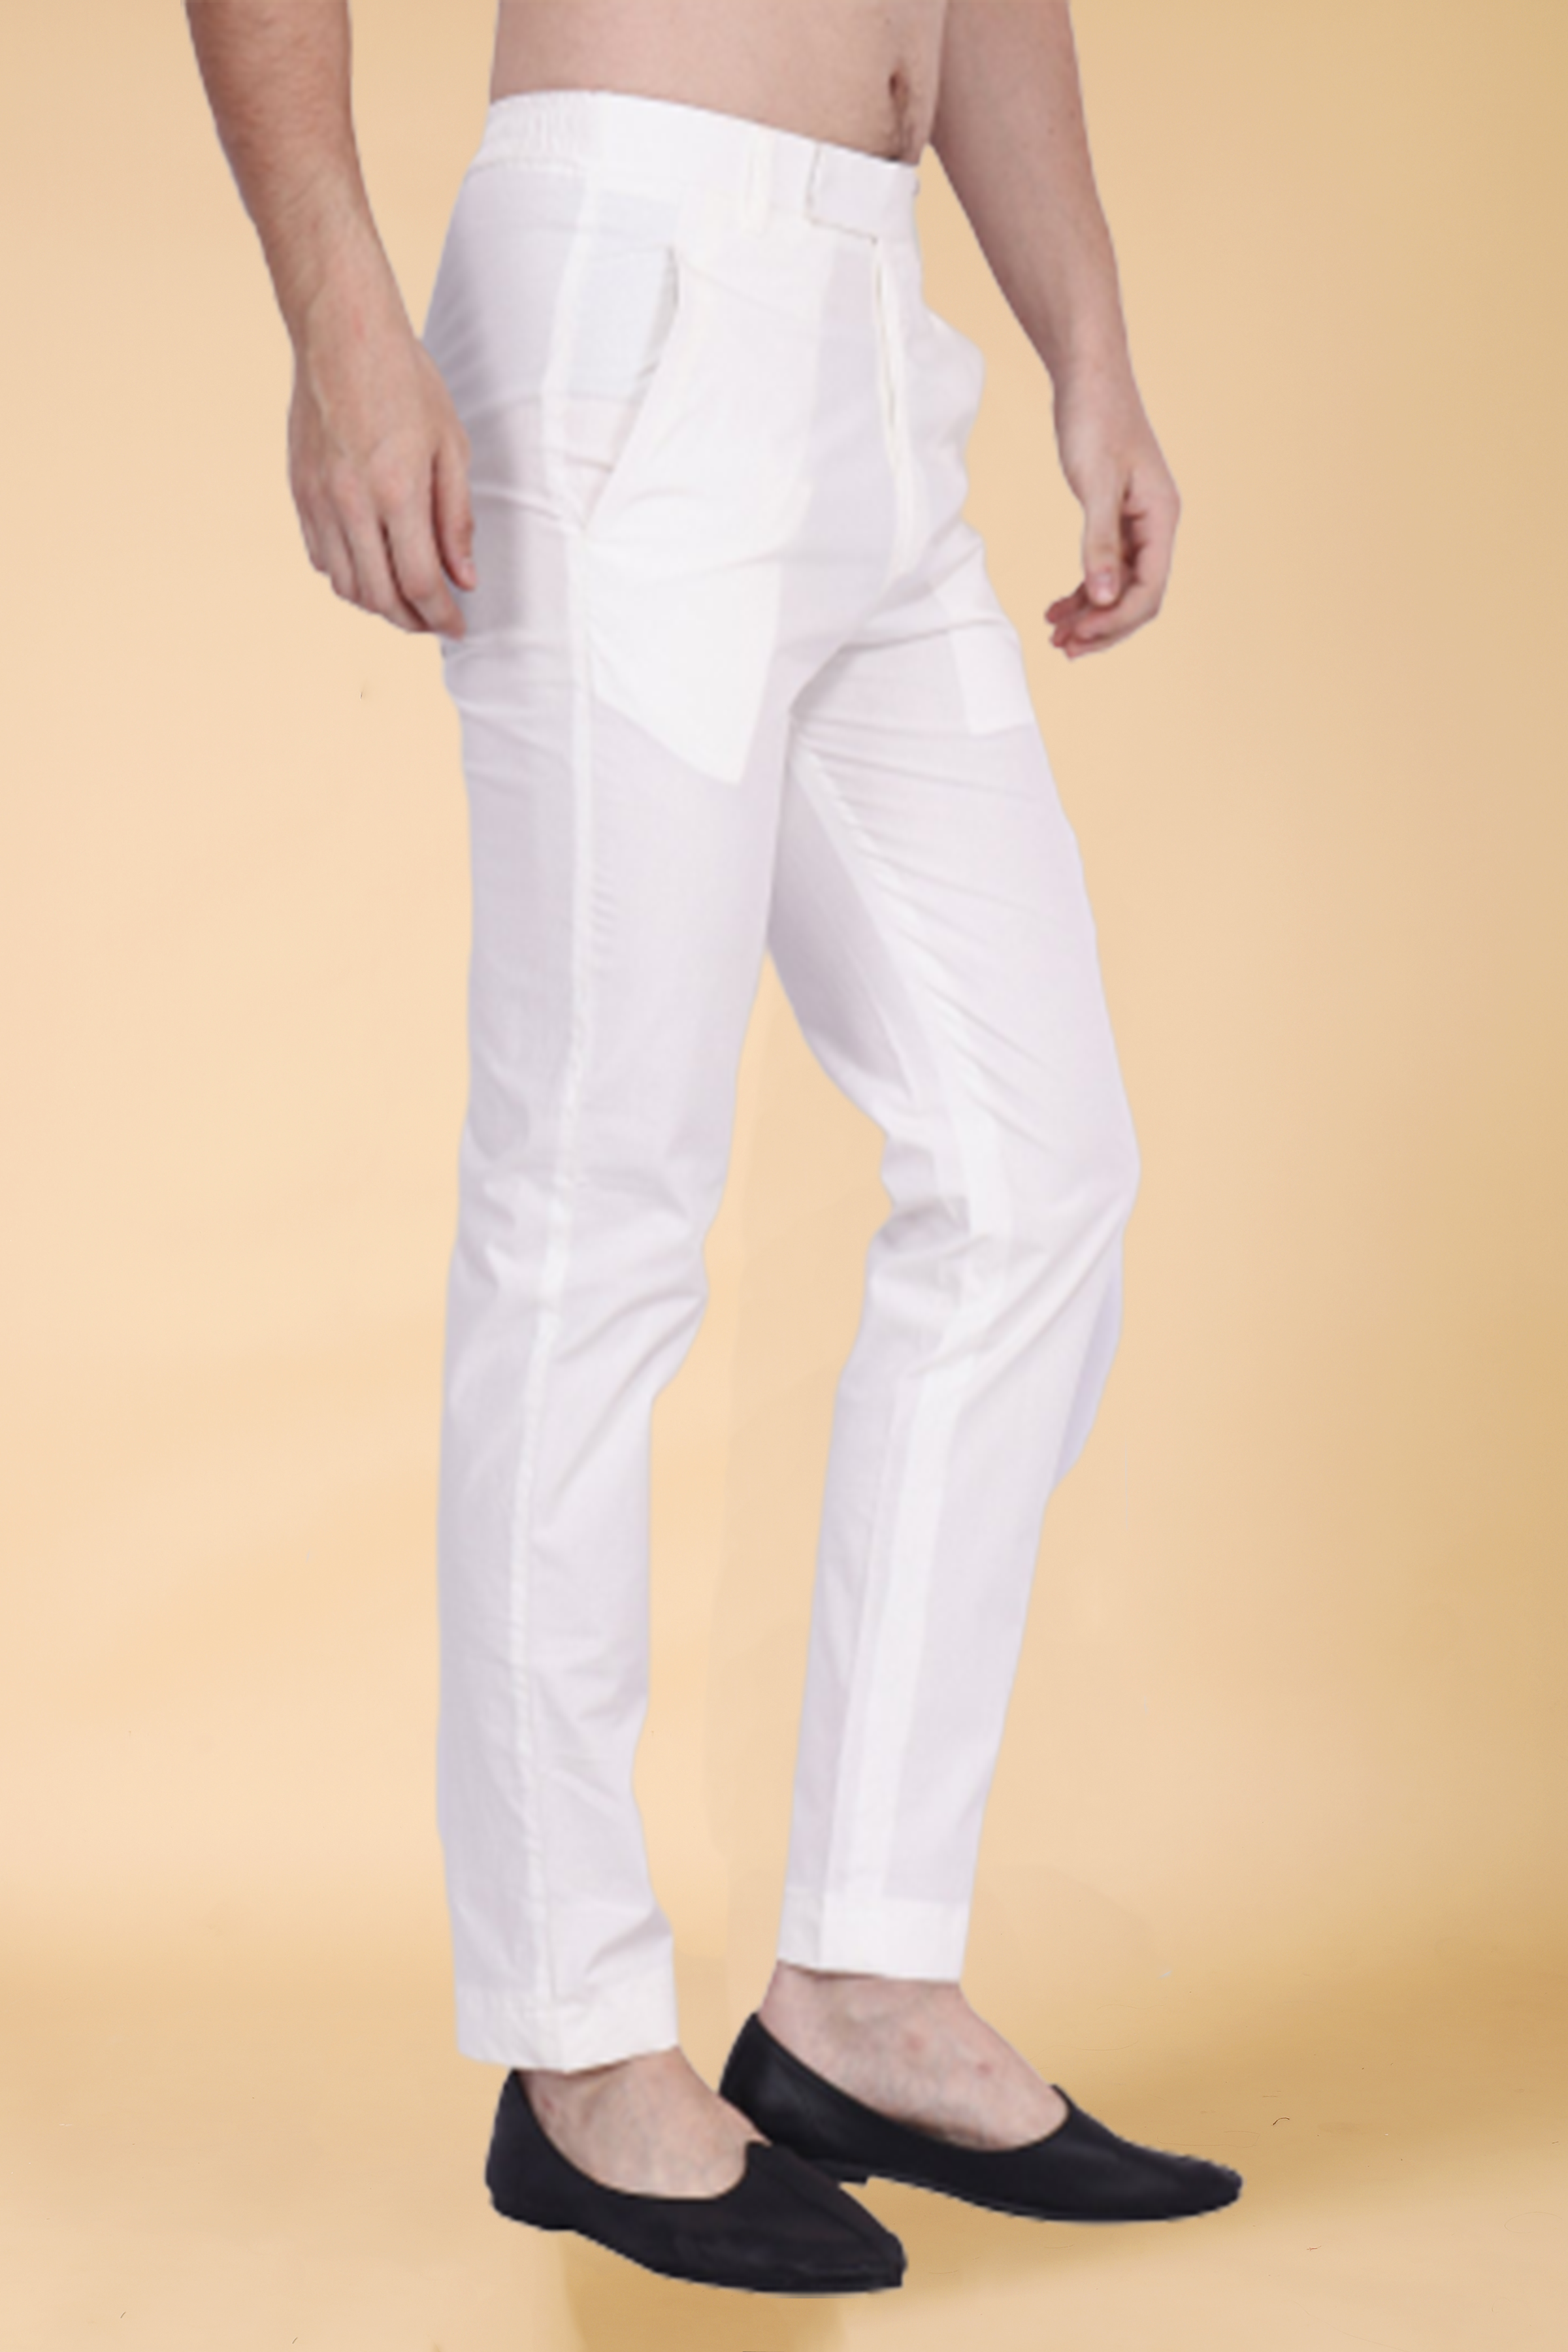 Cotton SemiFormal TrouserPearl White